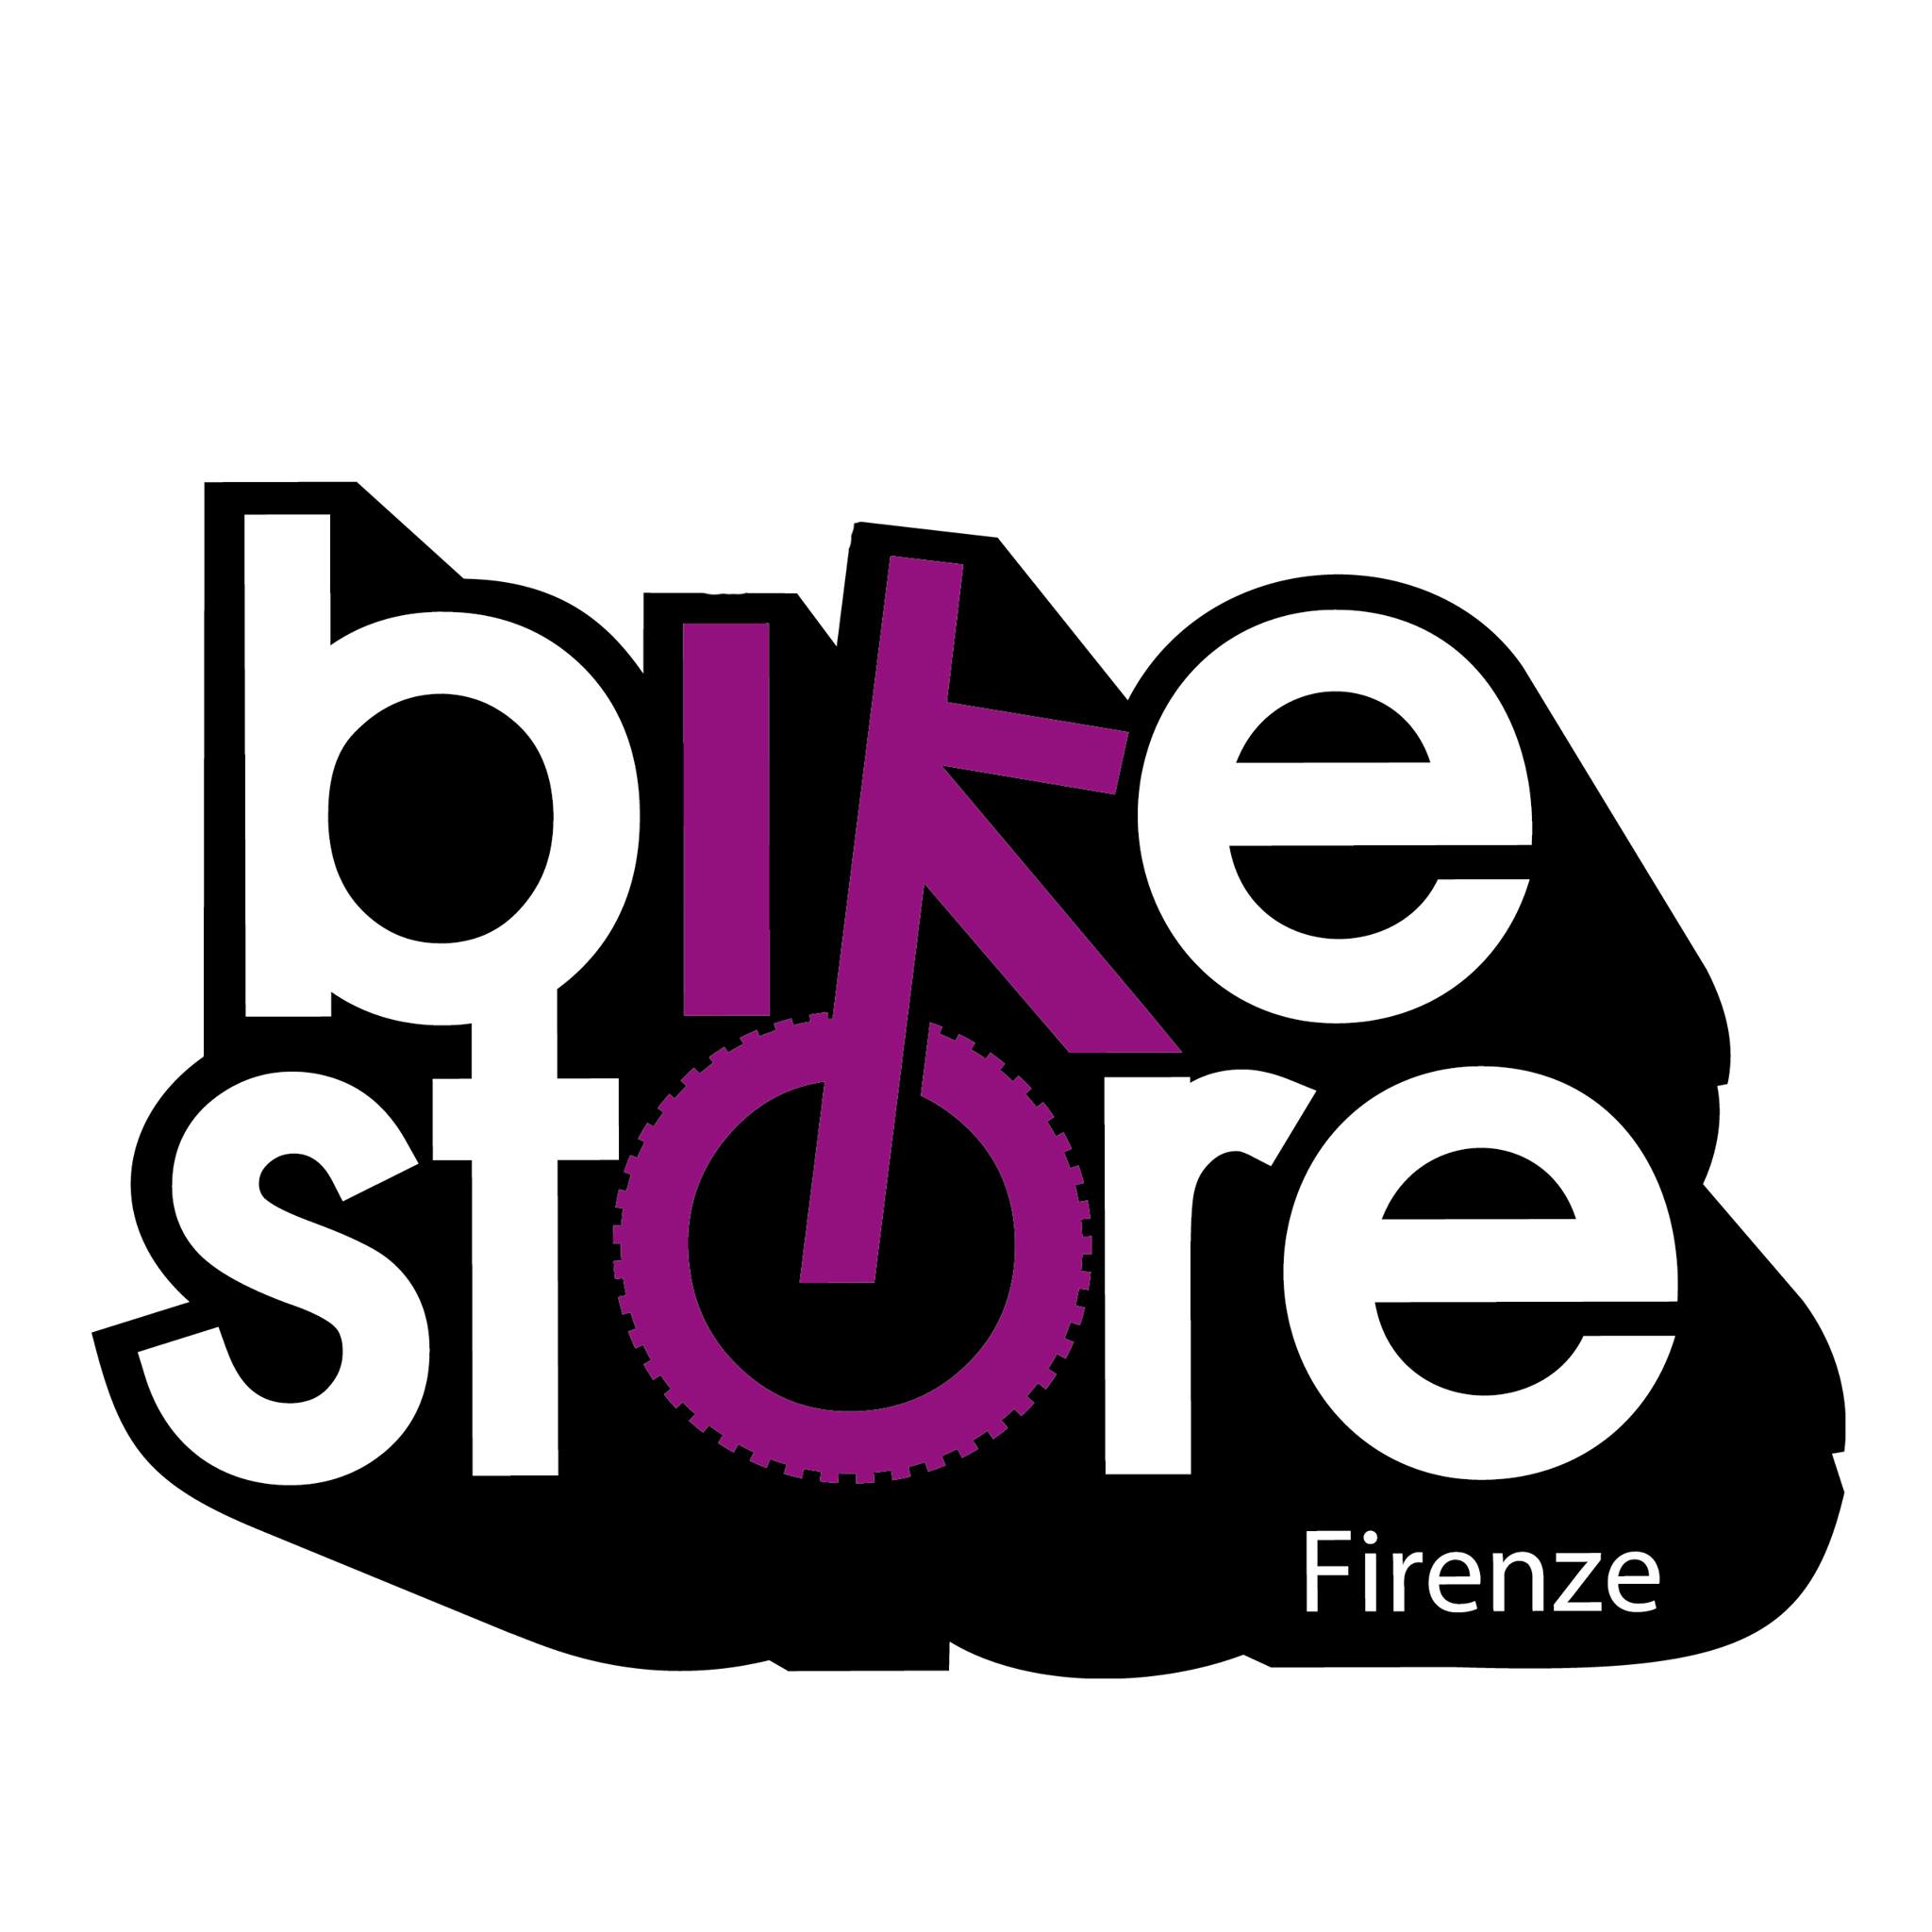 bike store firenze